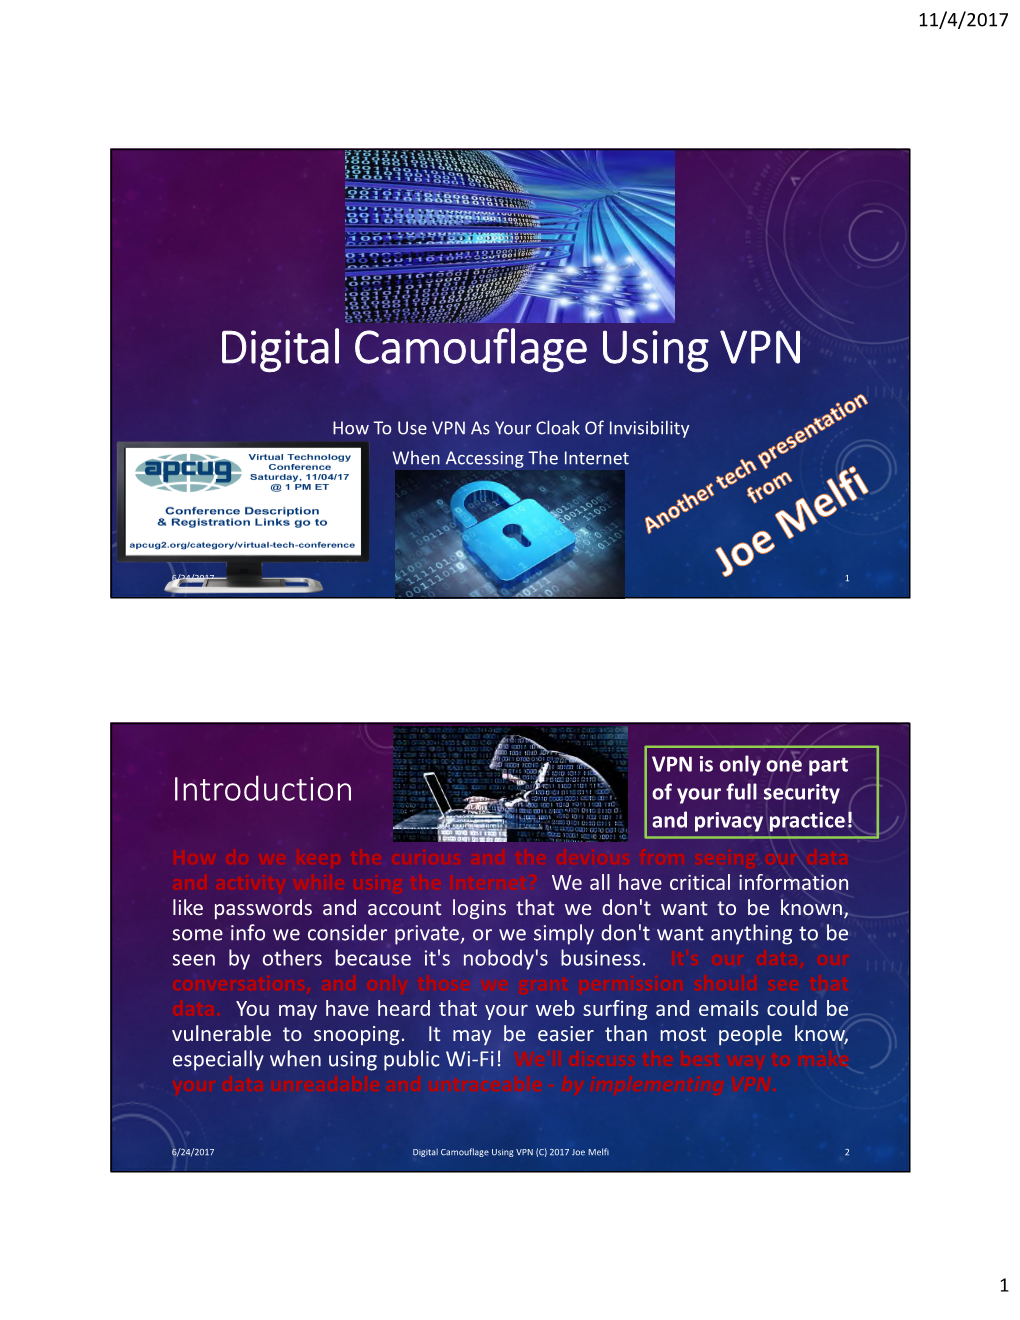 Digital Camouflage Using VPN